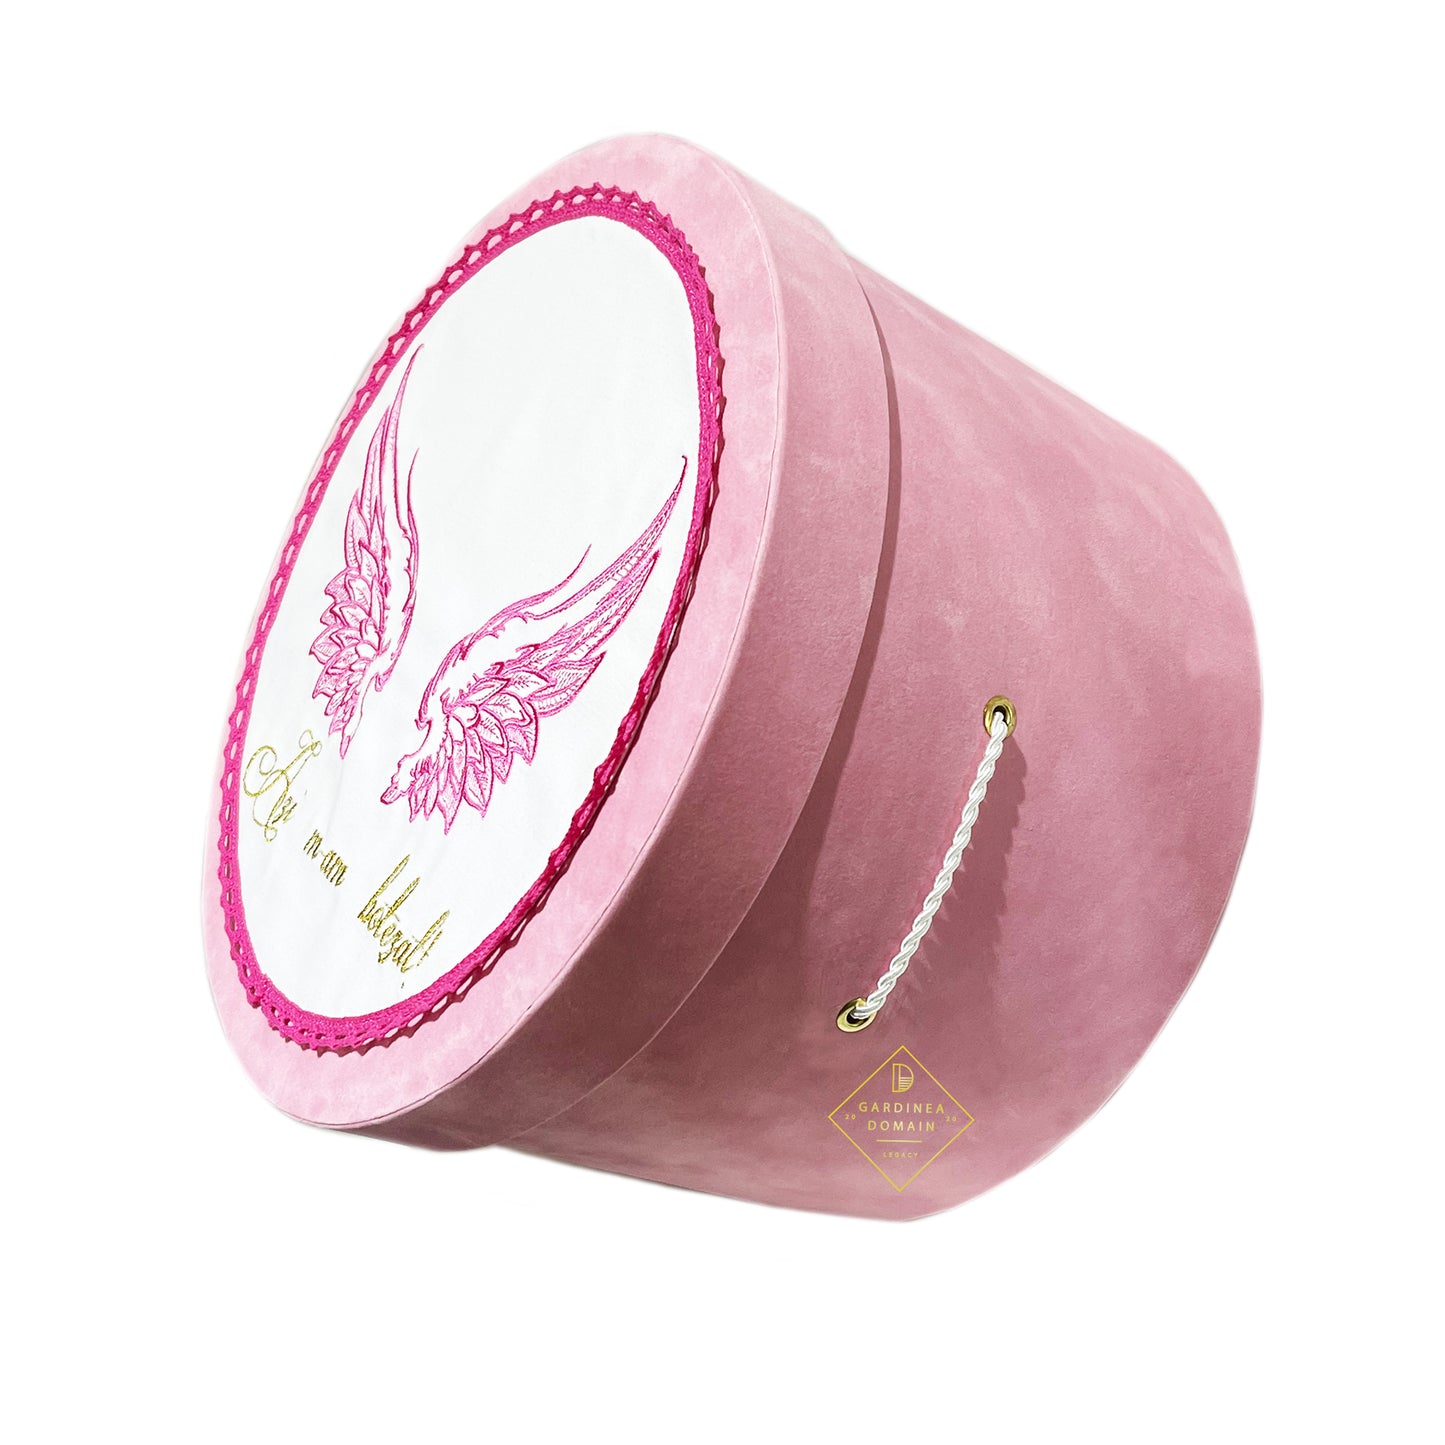 Trusou elegant botez Gardinea Domain® 10 piese, cutie trusou din catifea roz si capac personalizat brodat cu mesajul "Azi m-am botezat!", decor dantela